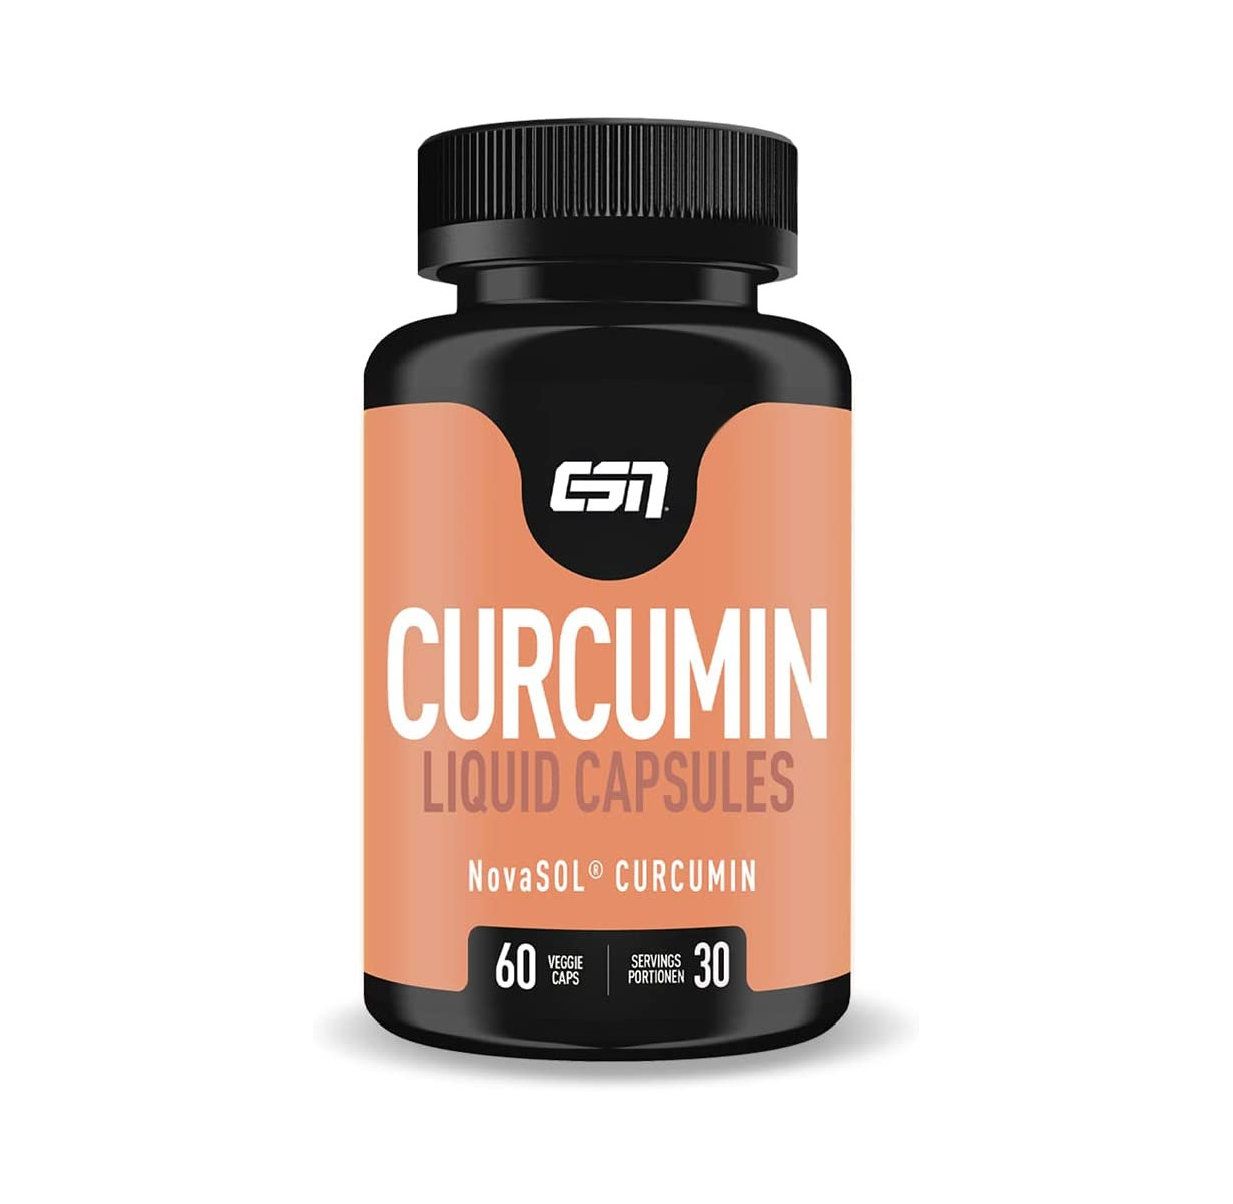 ESN Curcumin Liquid